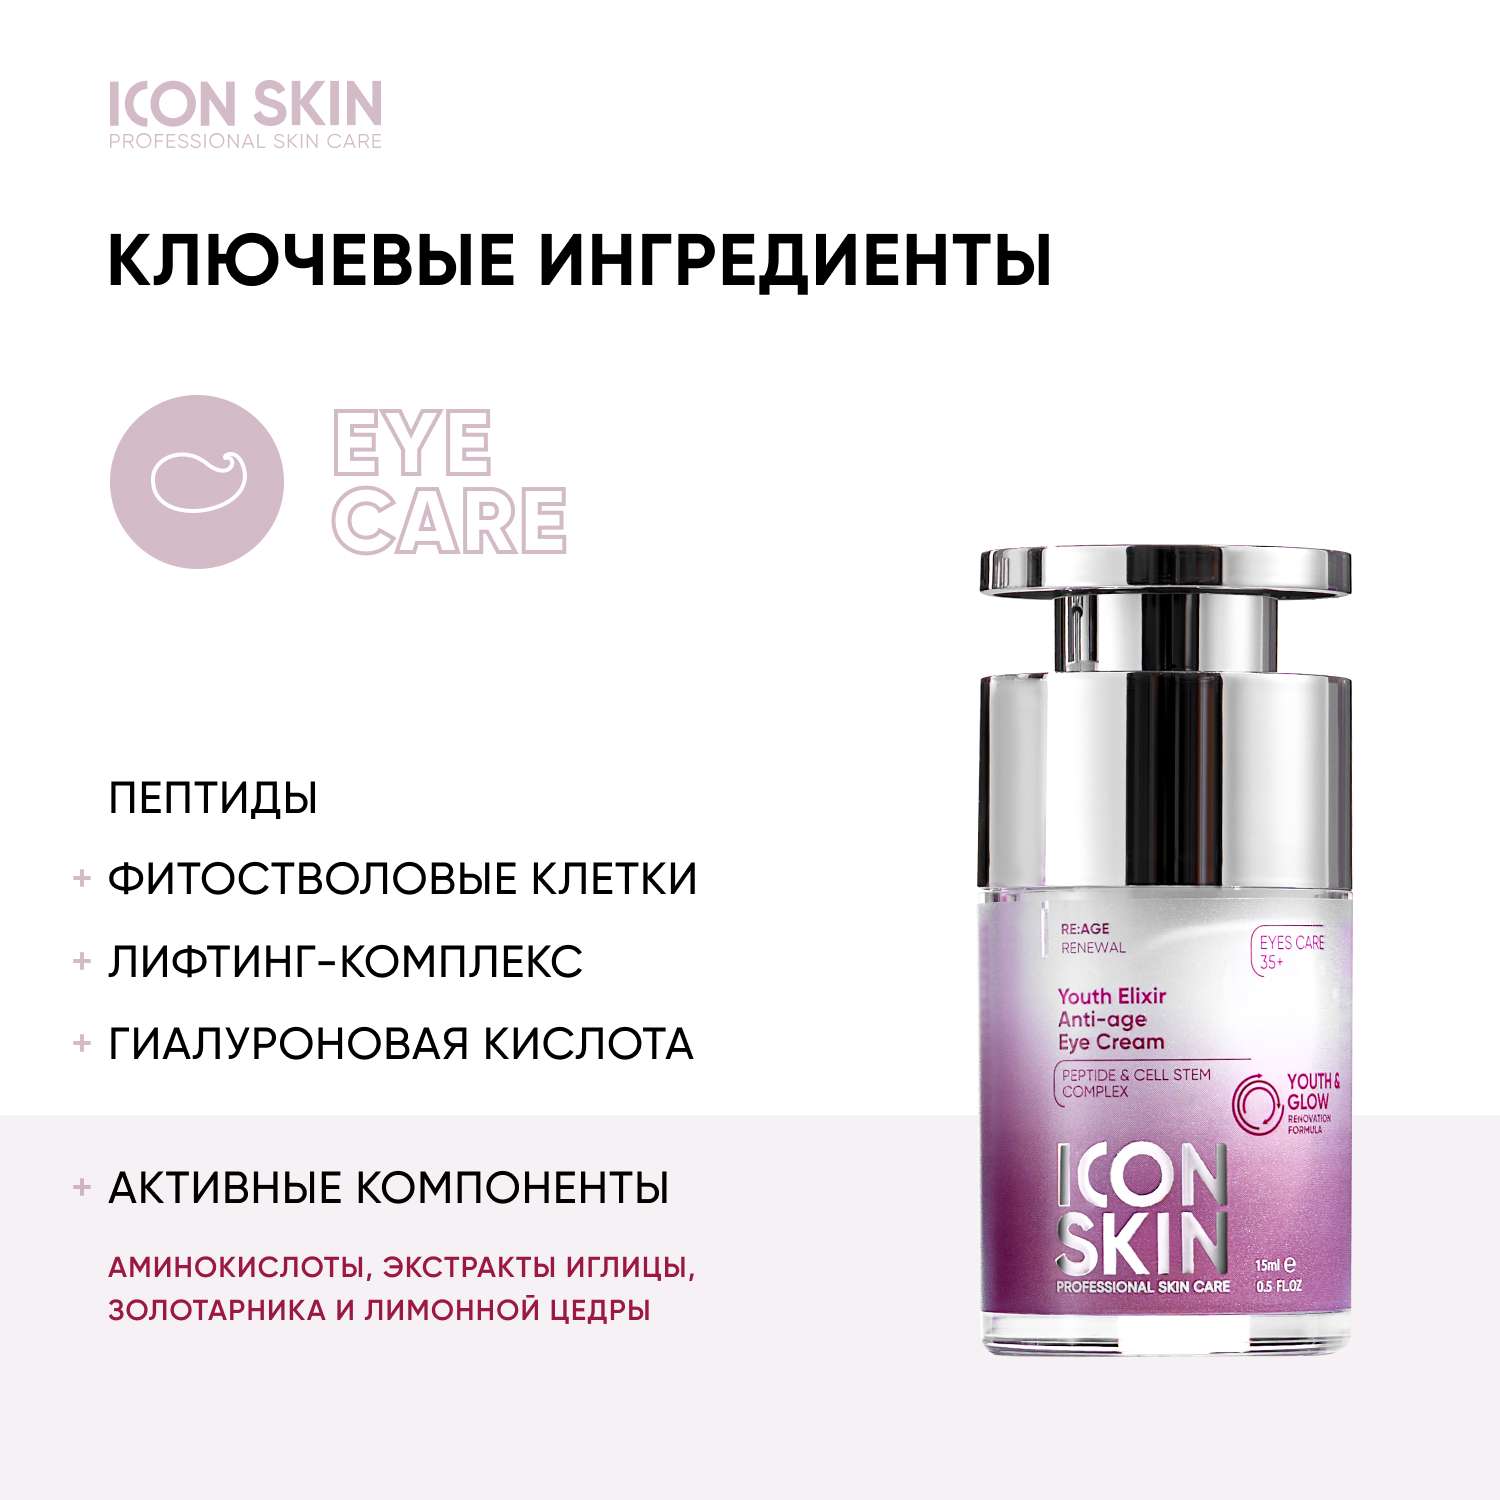 Крем для кожи вокруг глаз ICON SKIN Youth Elixir - фото 5